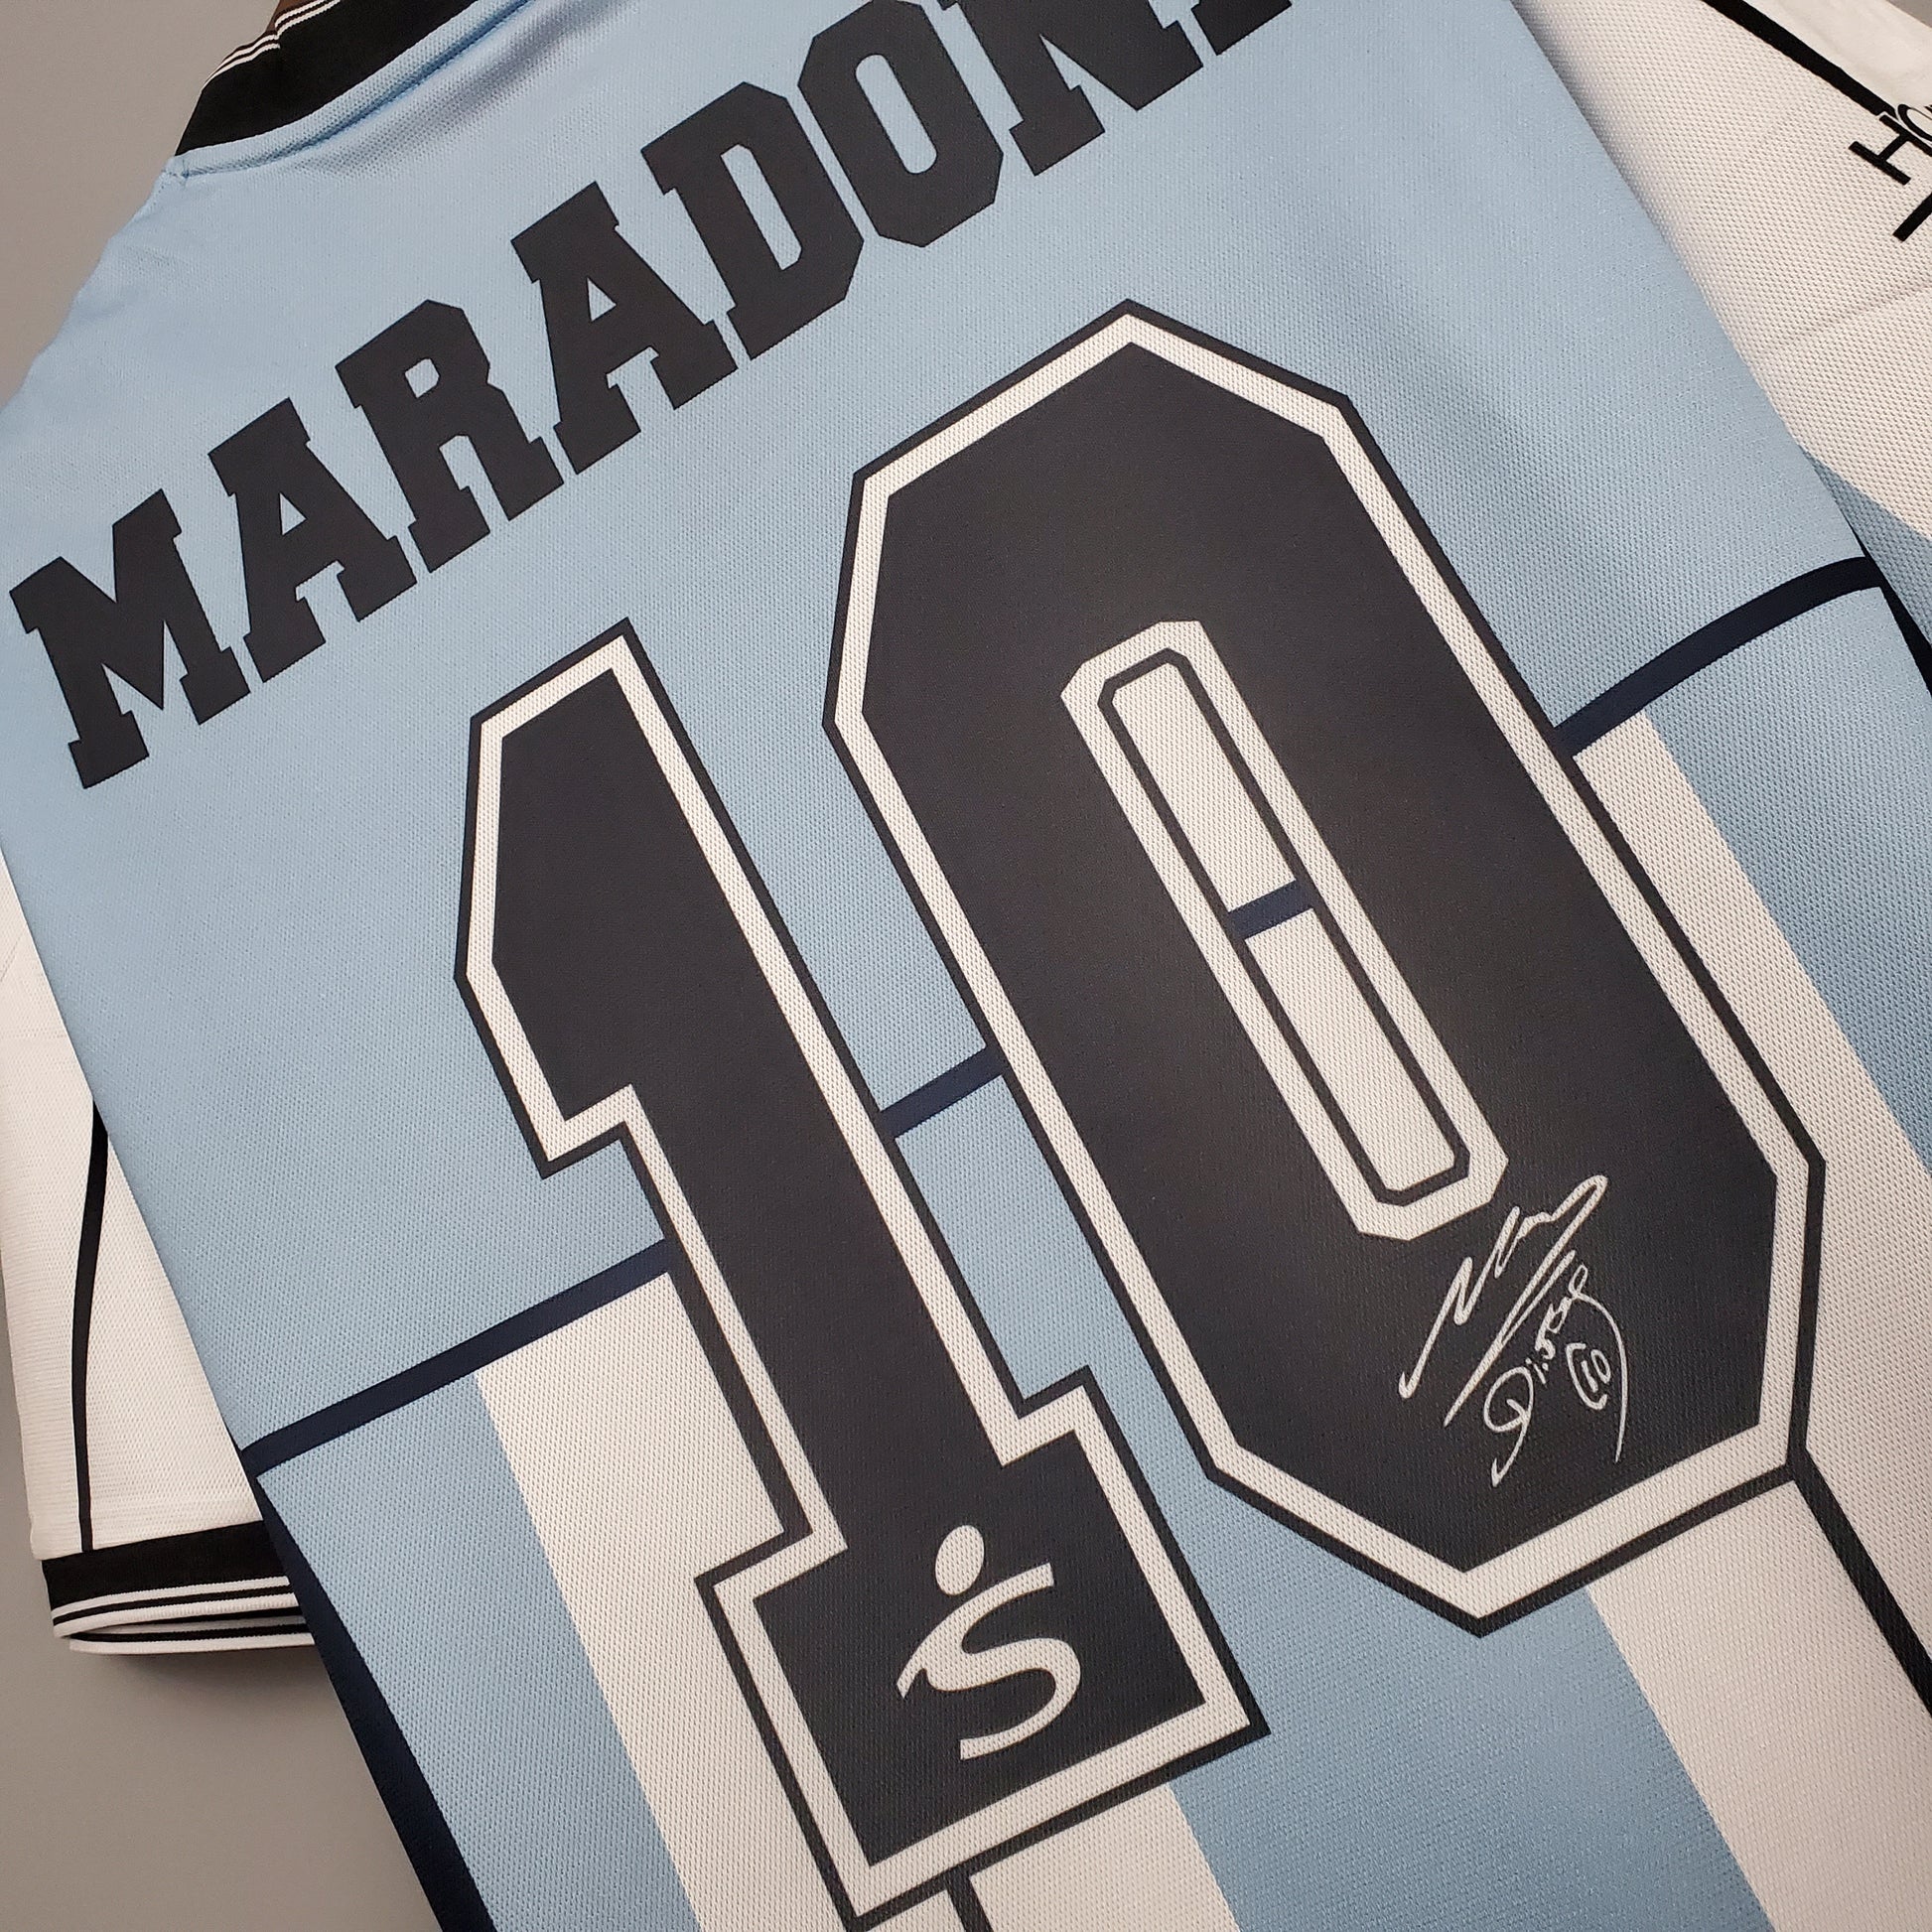 Replica Maradona #10 Argentina Commemorative Jersey 2021 By Adidas |  Argentina